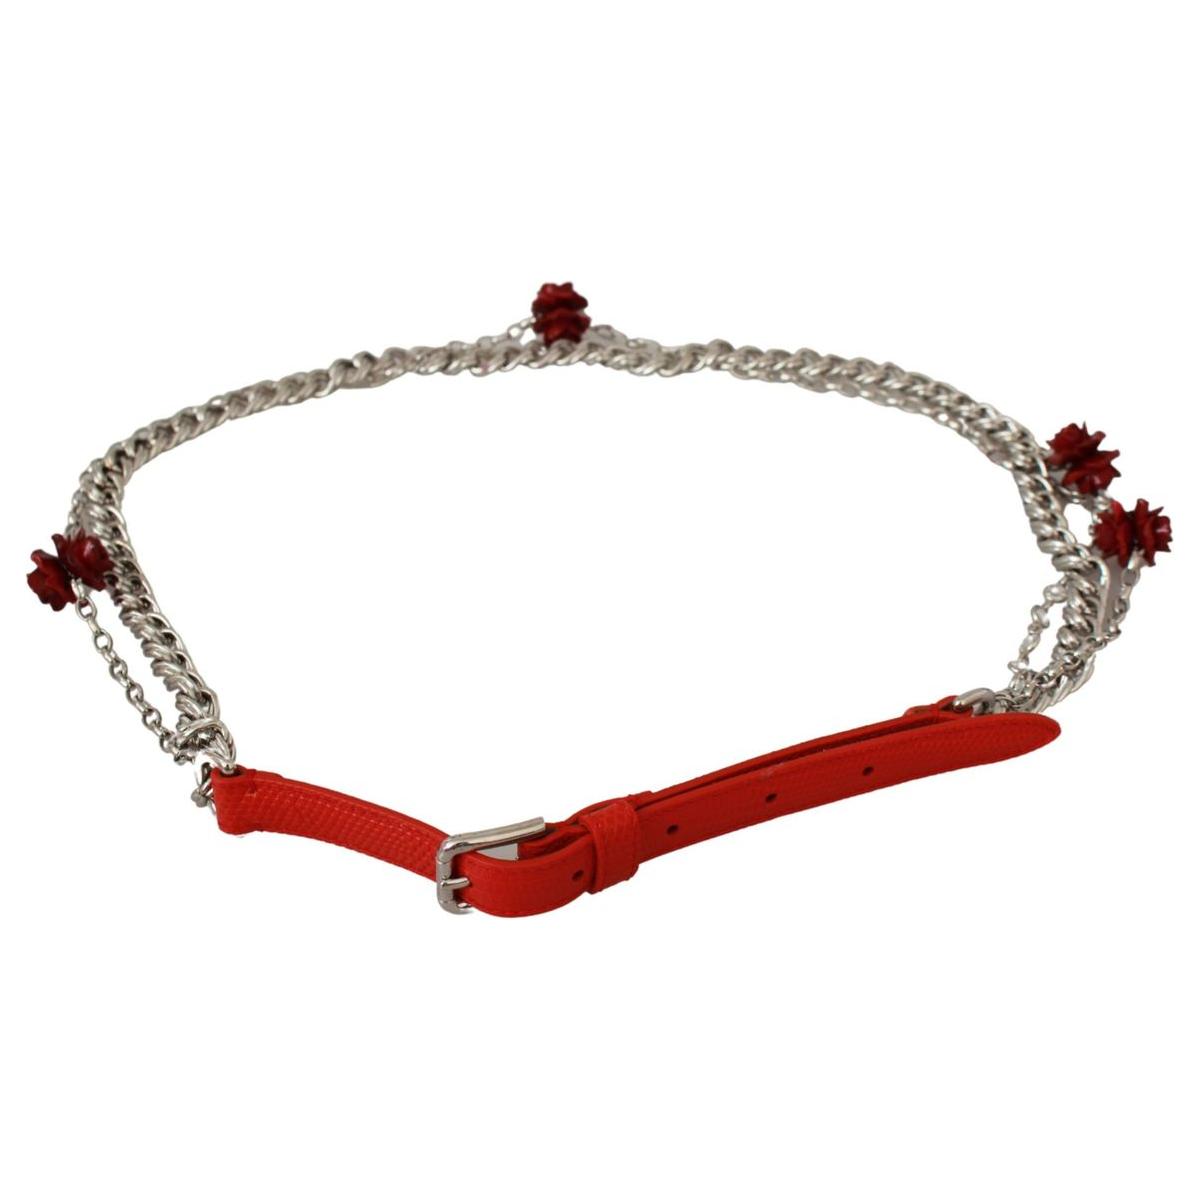 Dolce & Gabbana Elegant Floral Rose Waist Belt in Vibrant Red red-leather-roses-floral-silver-waist-belt Belt IMG_1566-scaled-c2409cf2-73f_bf5d0434-a1c6-4e7c-83e7-757dea97b6c5.jpg